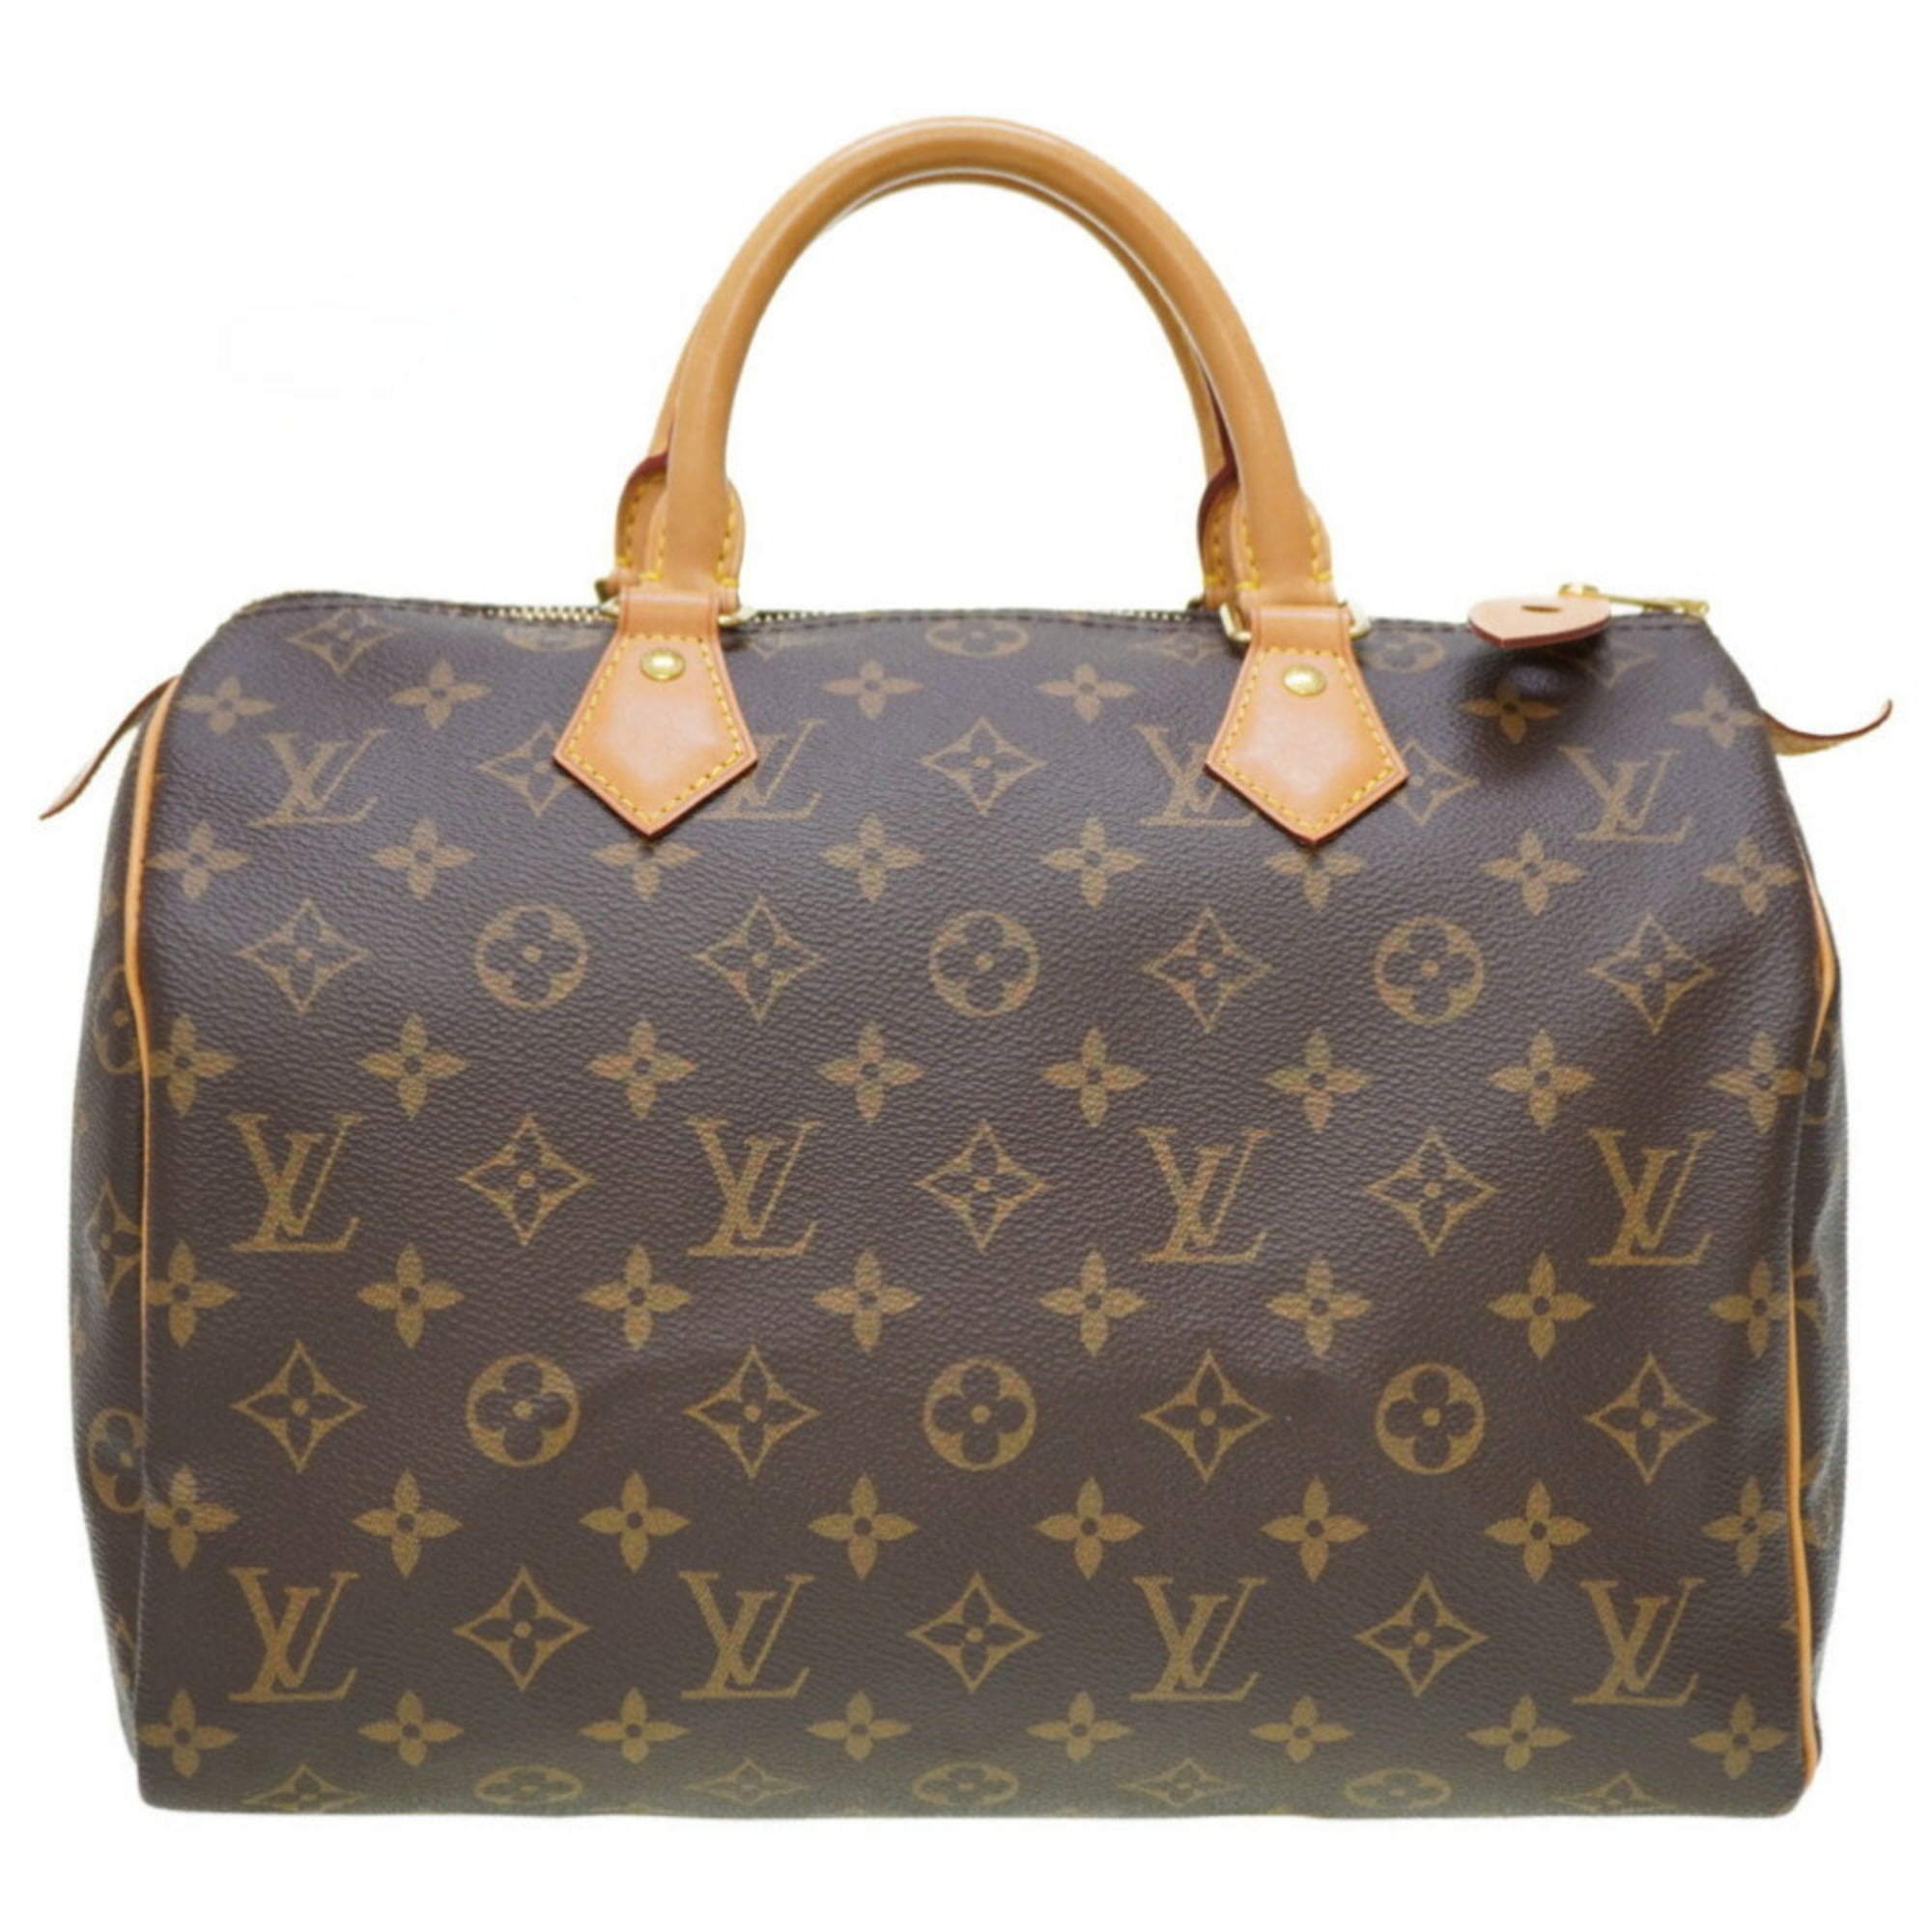 Authenticated Used Louis Vuitton Monogram Speedy 30 M41108 Handbag 